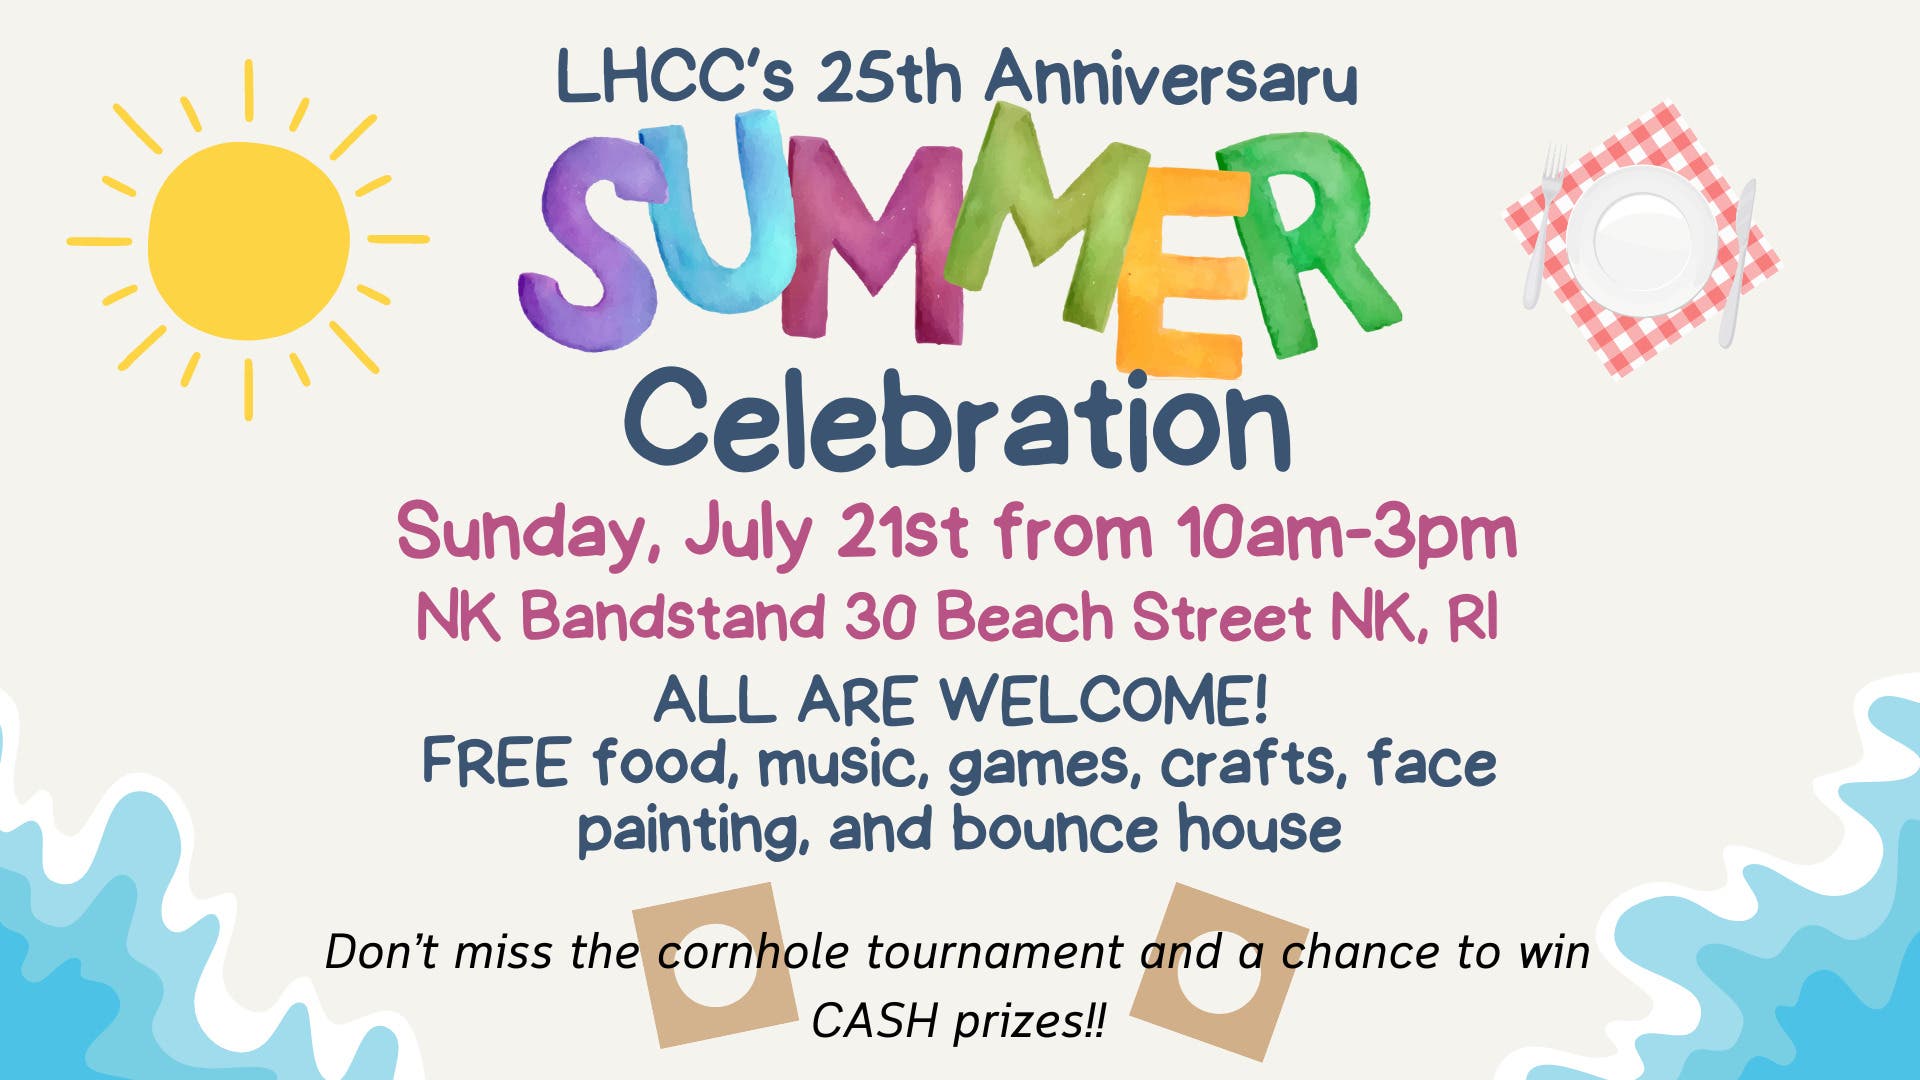 LHCC's 25th Anniversary Summer Celebration